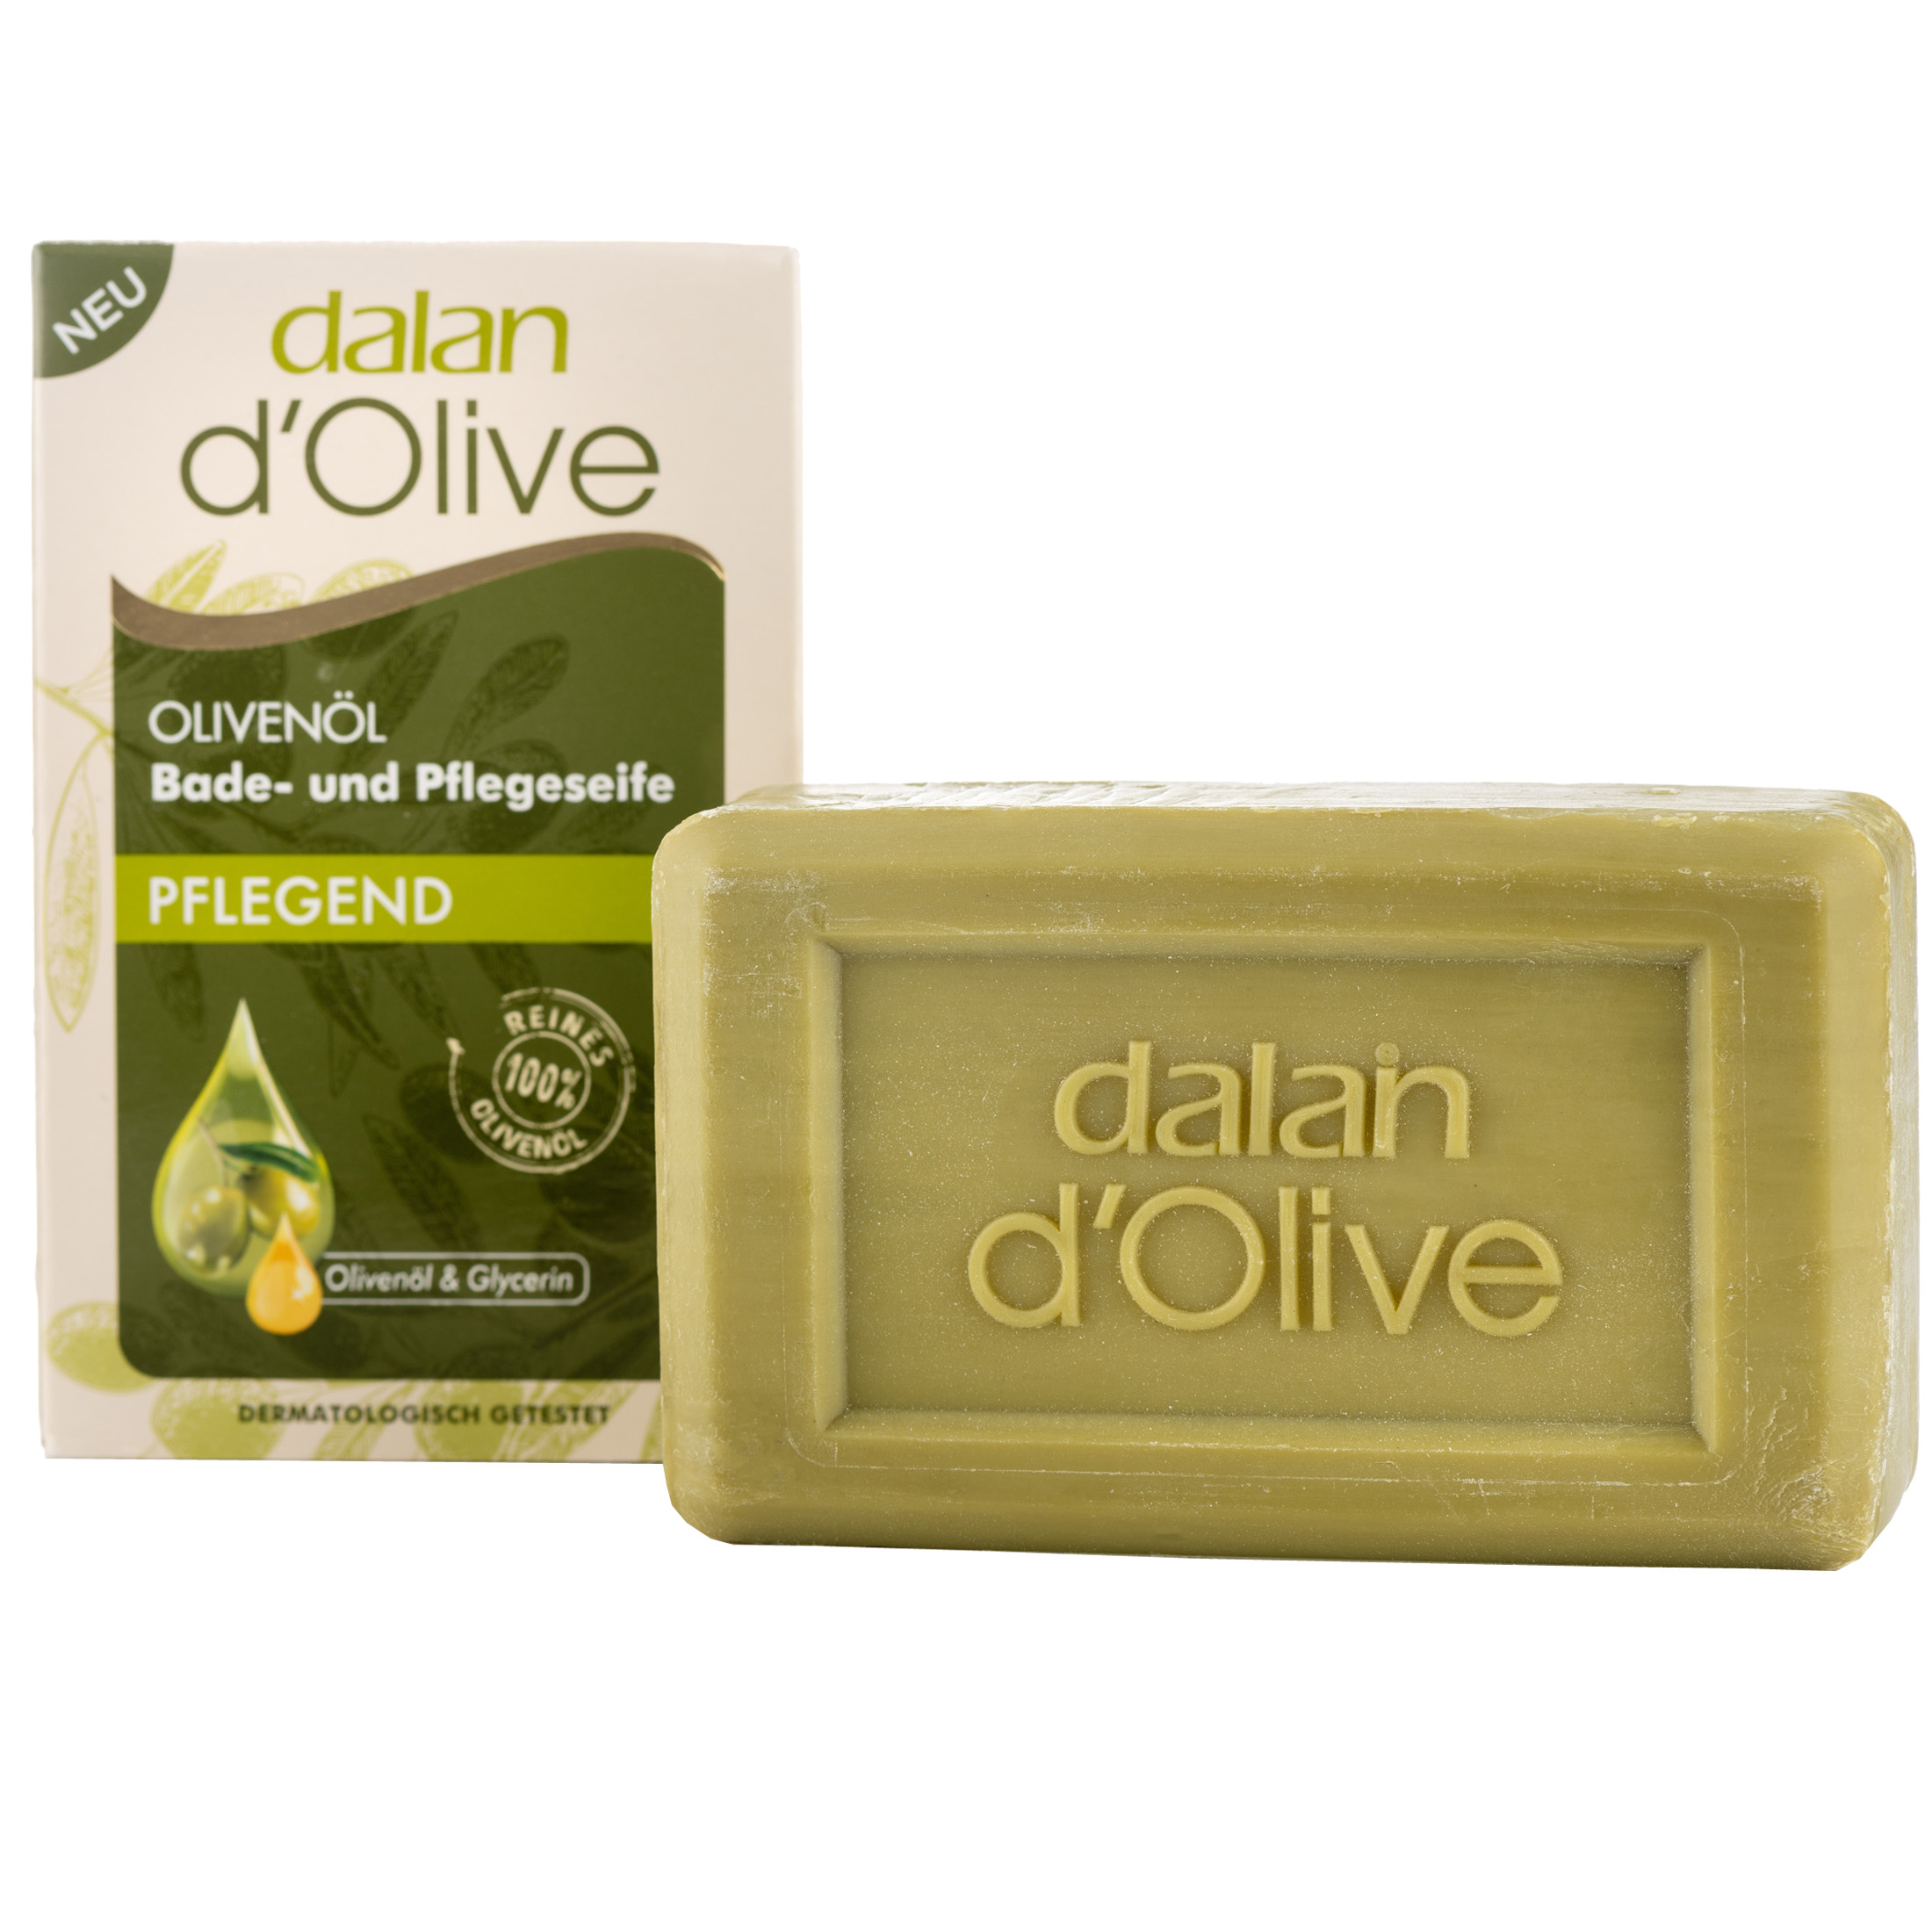 Dalan d'Olive Olive Oil Soap 200g